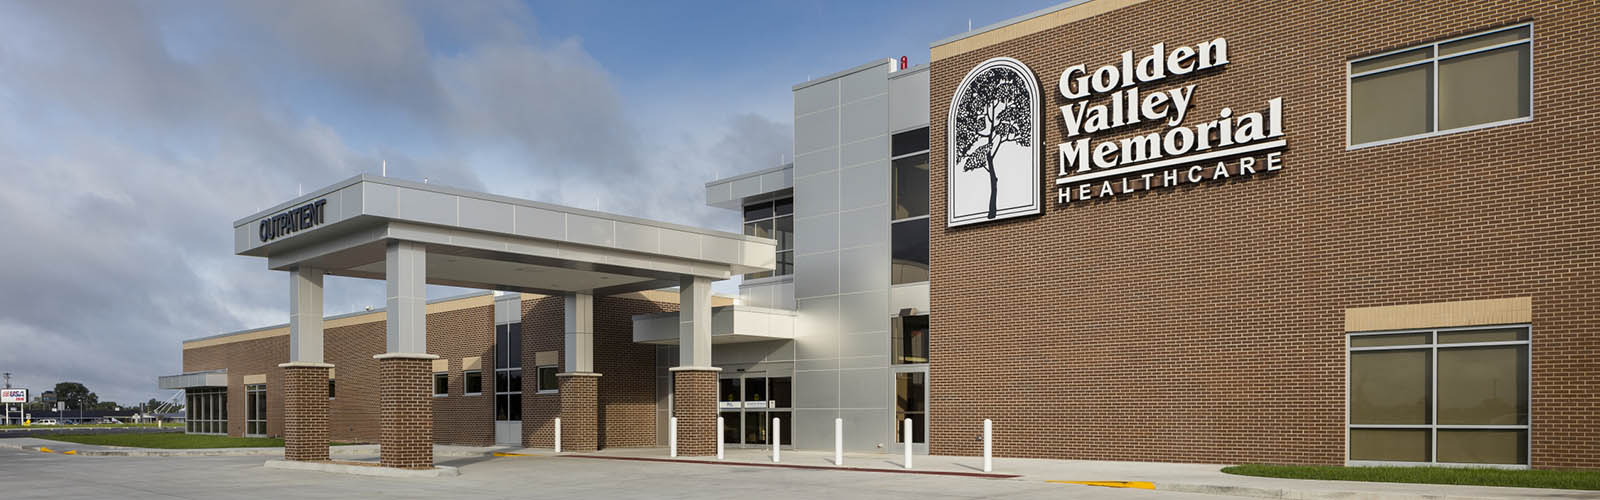 Golden Valley Memorial Hospital - Outpatient Expansion 1